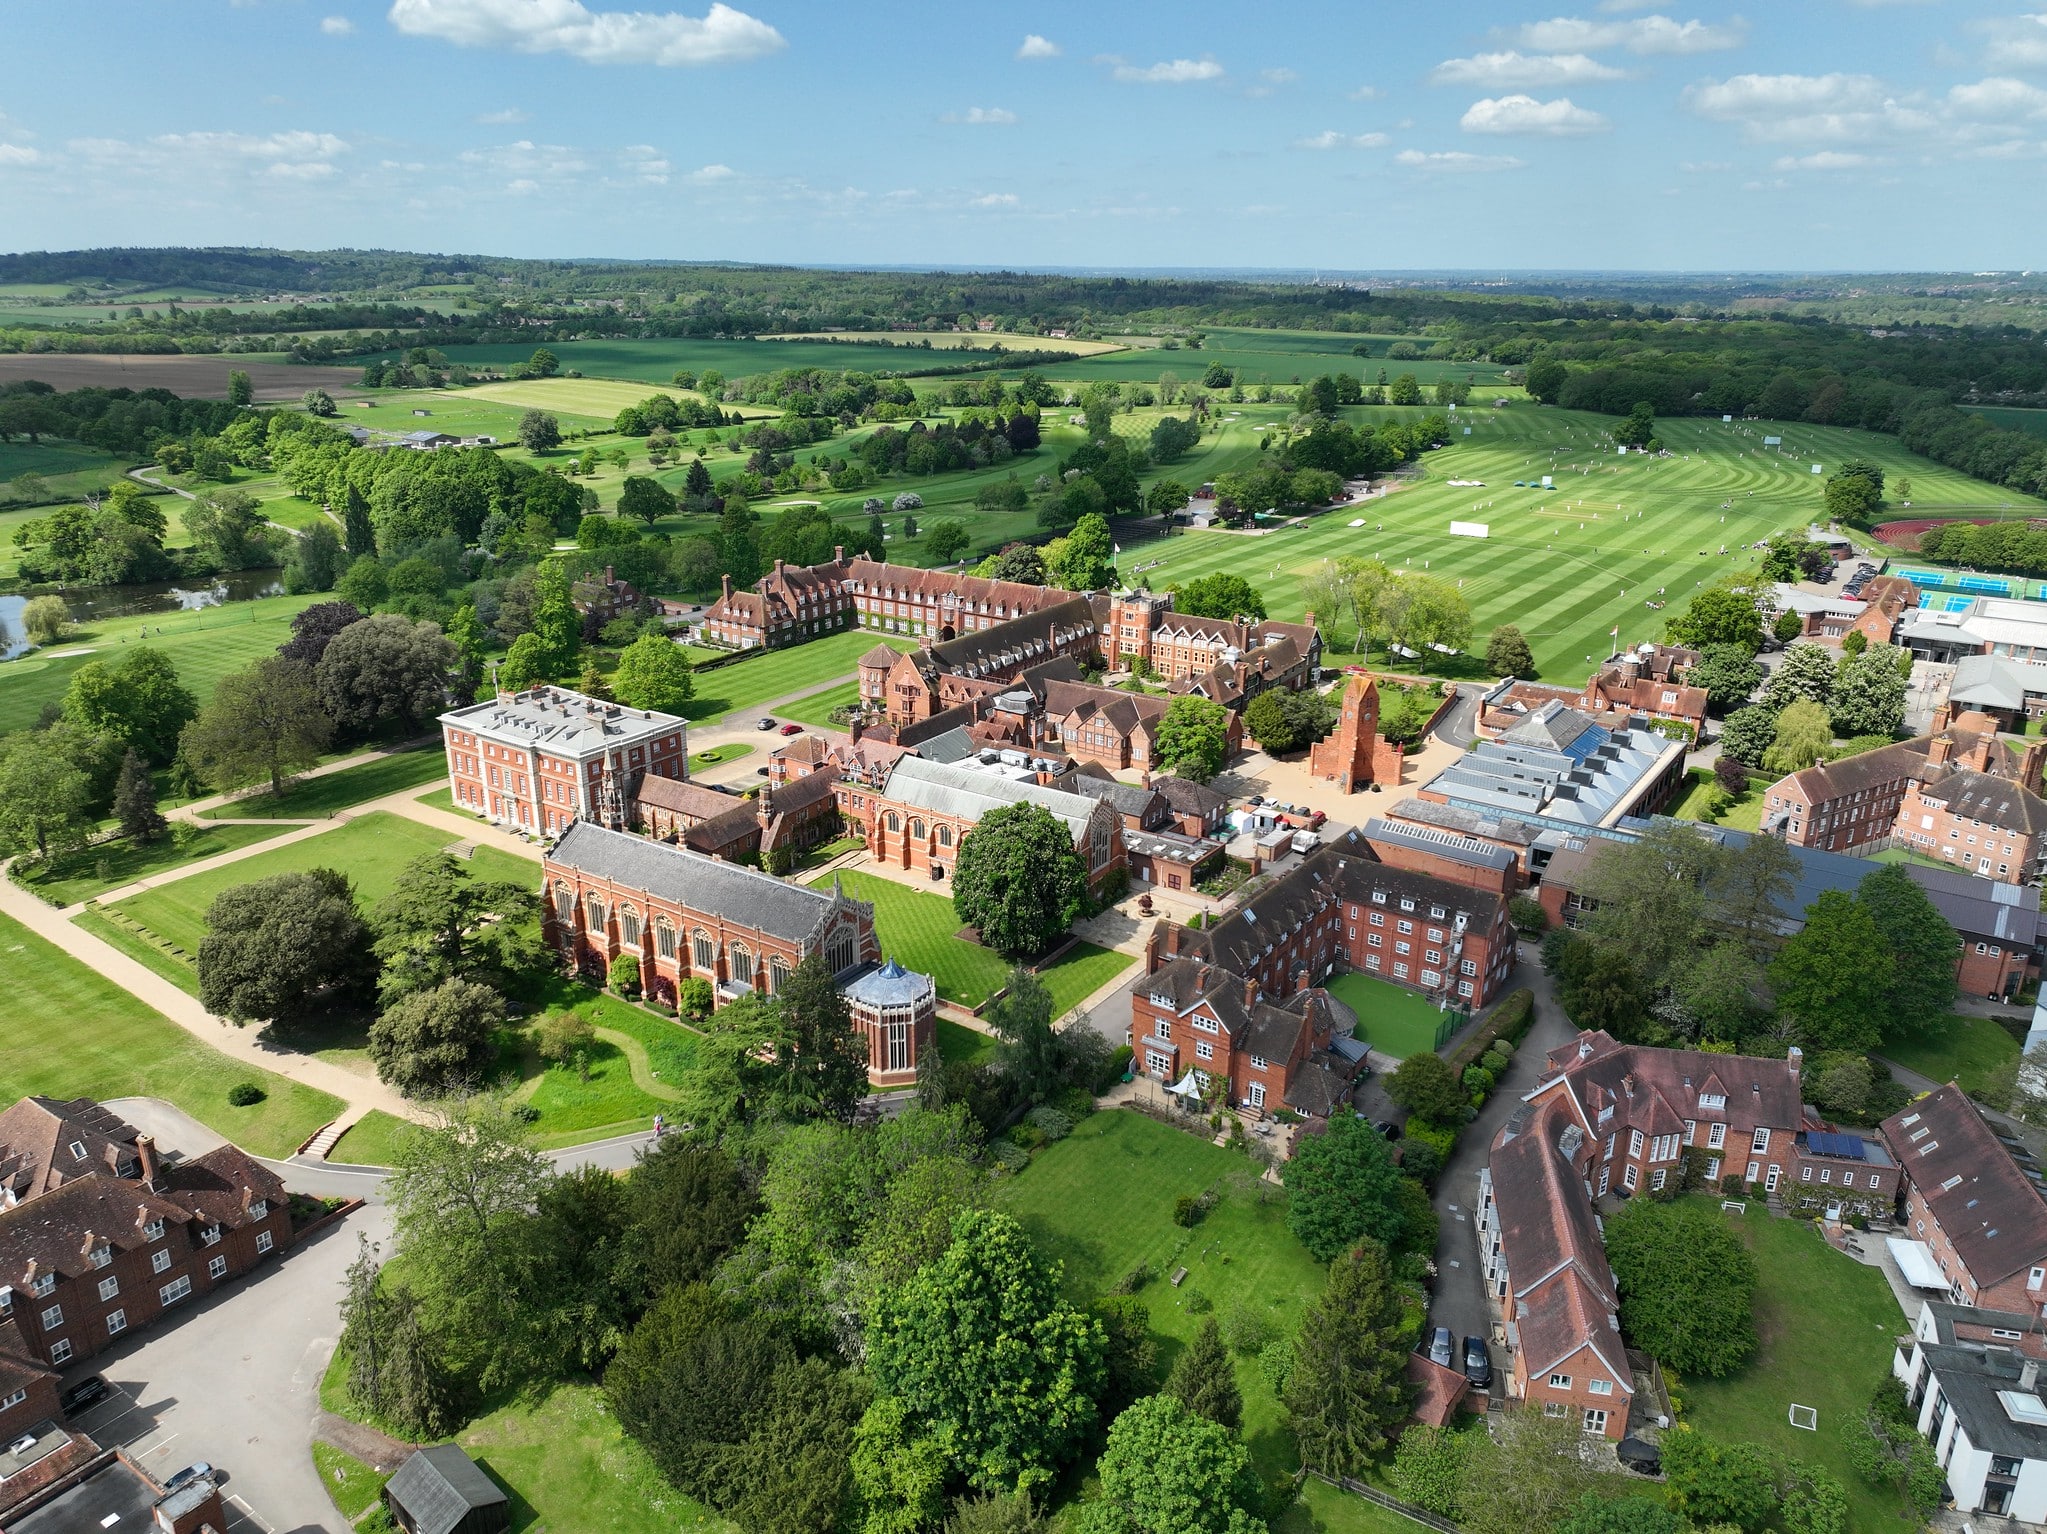 Radley College Drone Footage